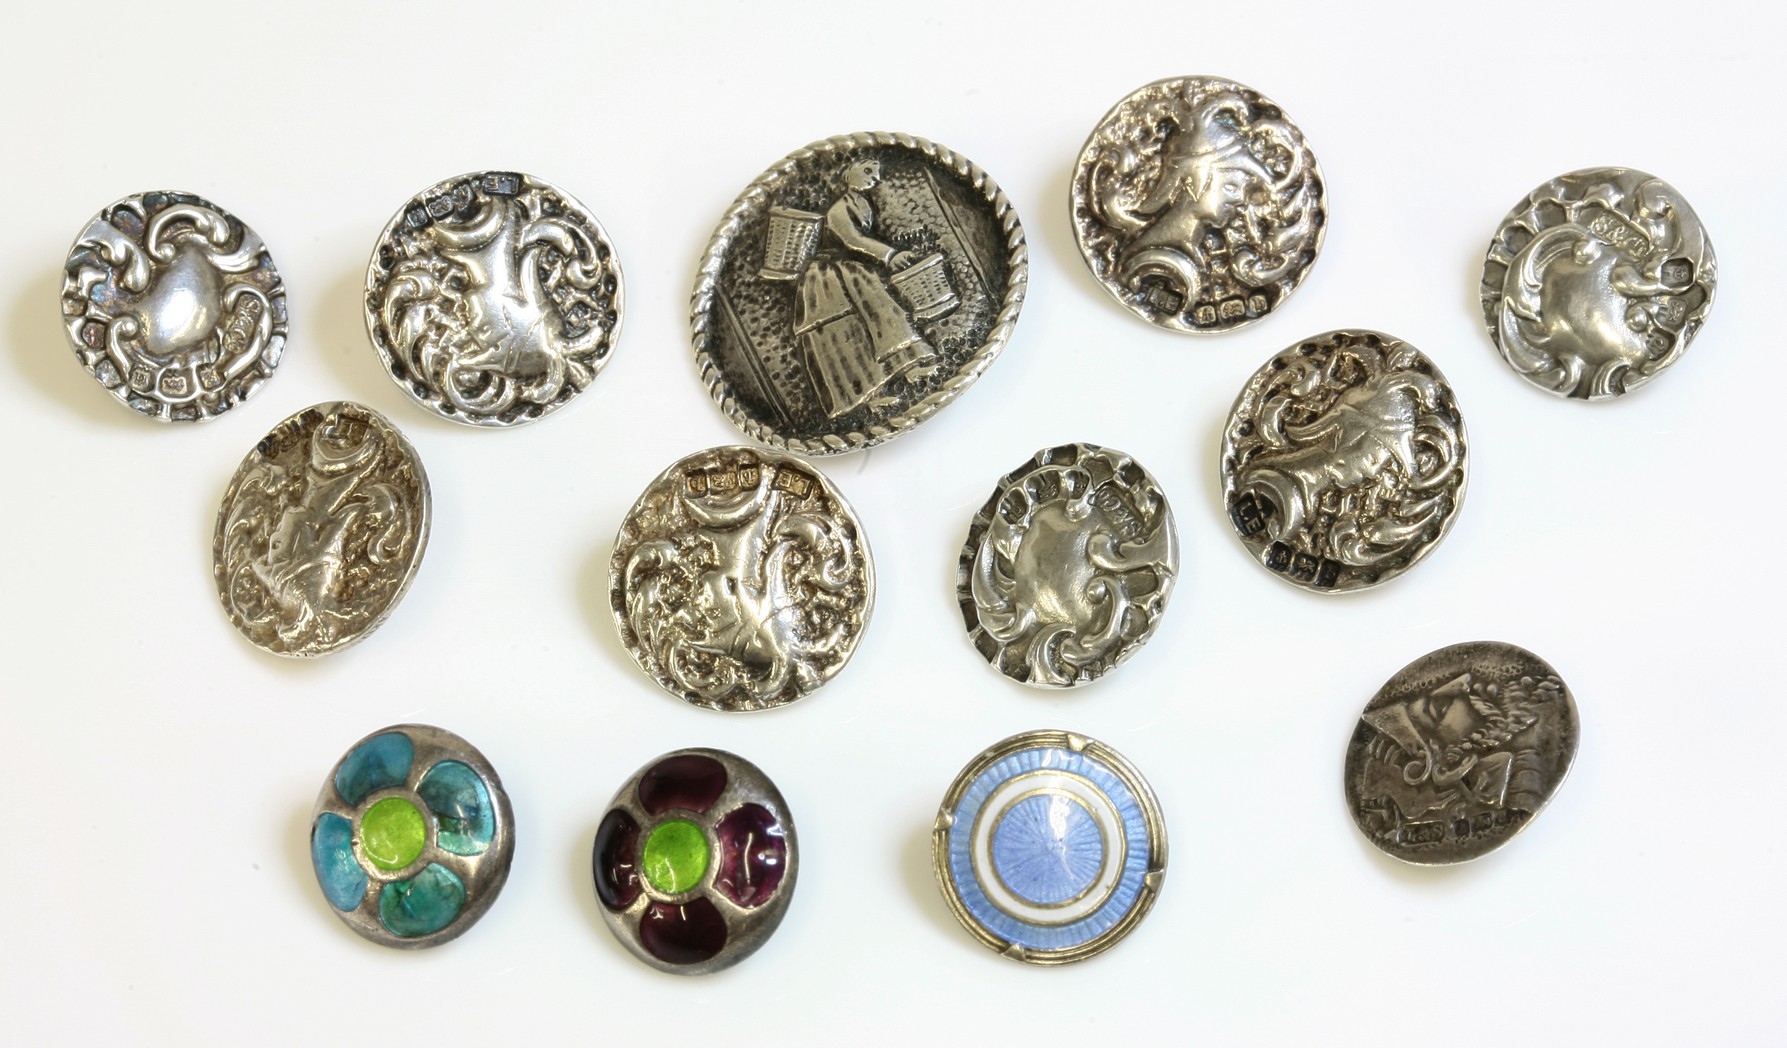 A set of five sterling silver Art Nouveau buttons,
by Lawrence Emanuel, Birmingham 1901, depicting a